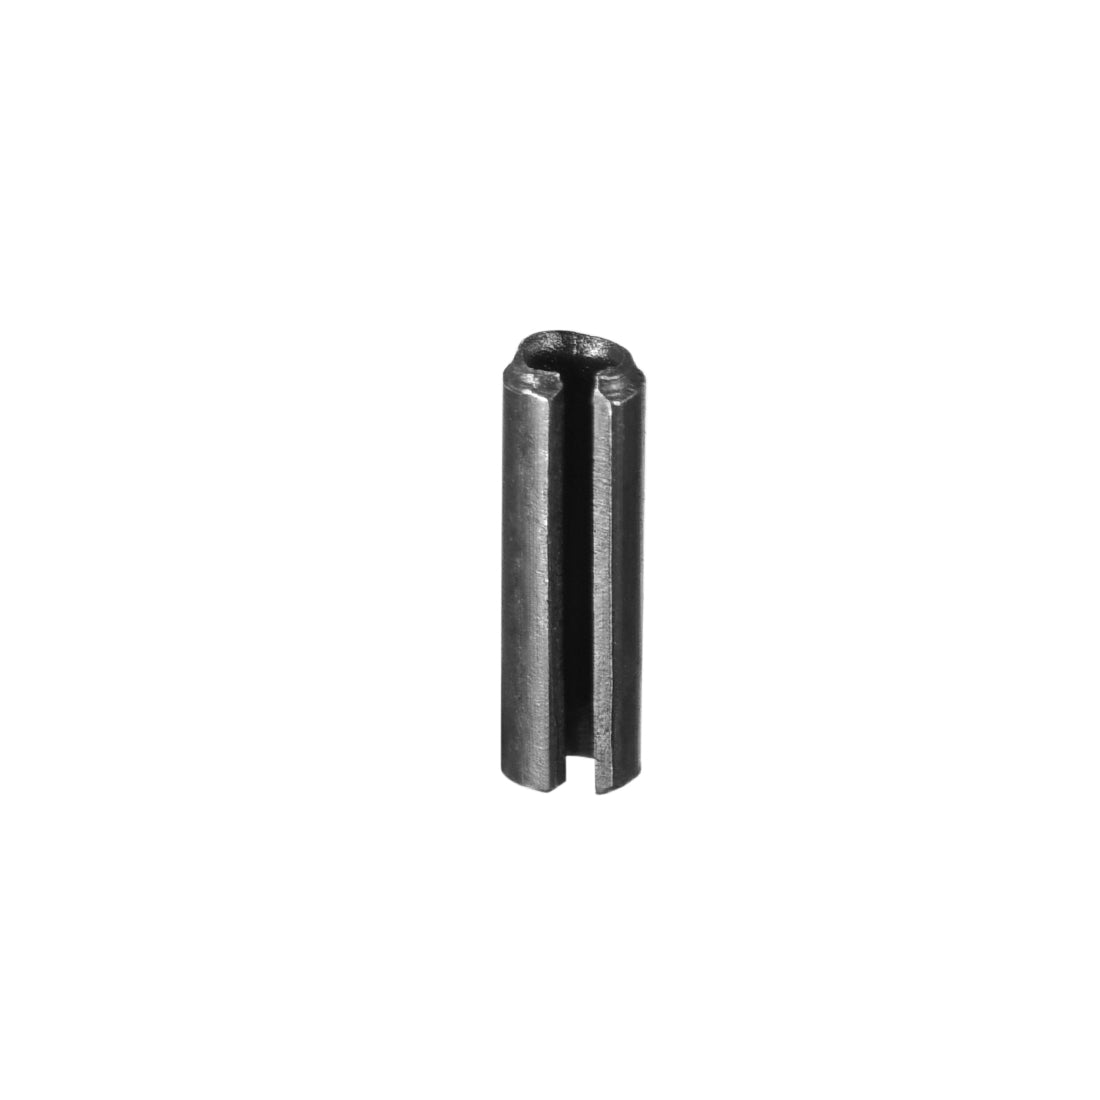 uxcell Uxcell 1.7mm x 6mm Dowel Pin Carbon Steel Split Spring Roll Shelf Support Pin Fasten Hardware Black 20 Pcs